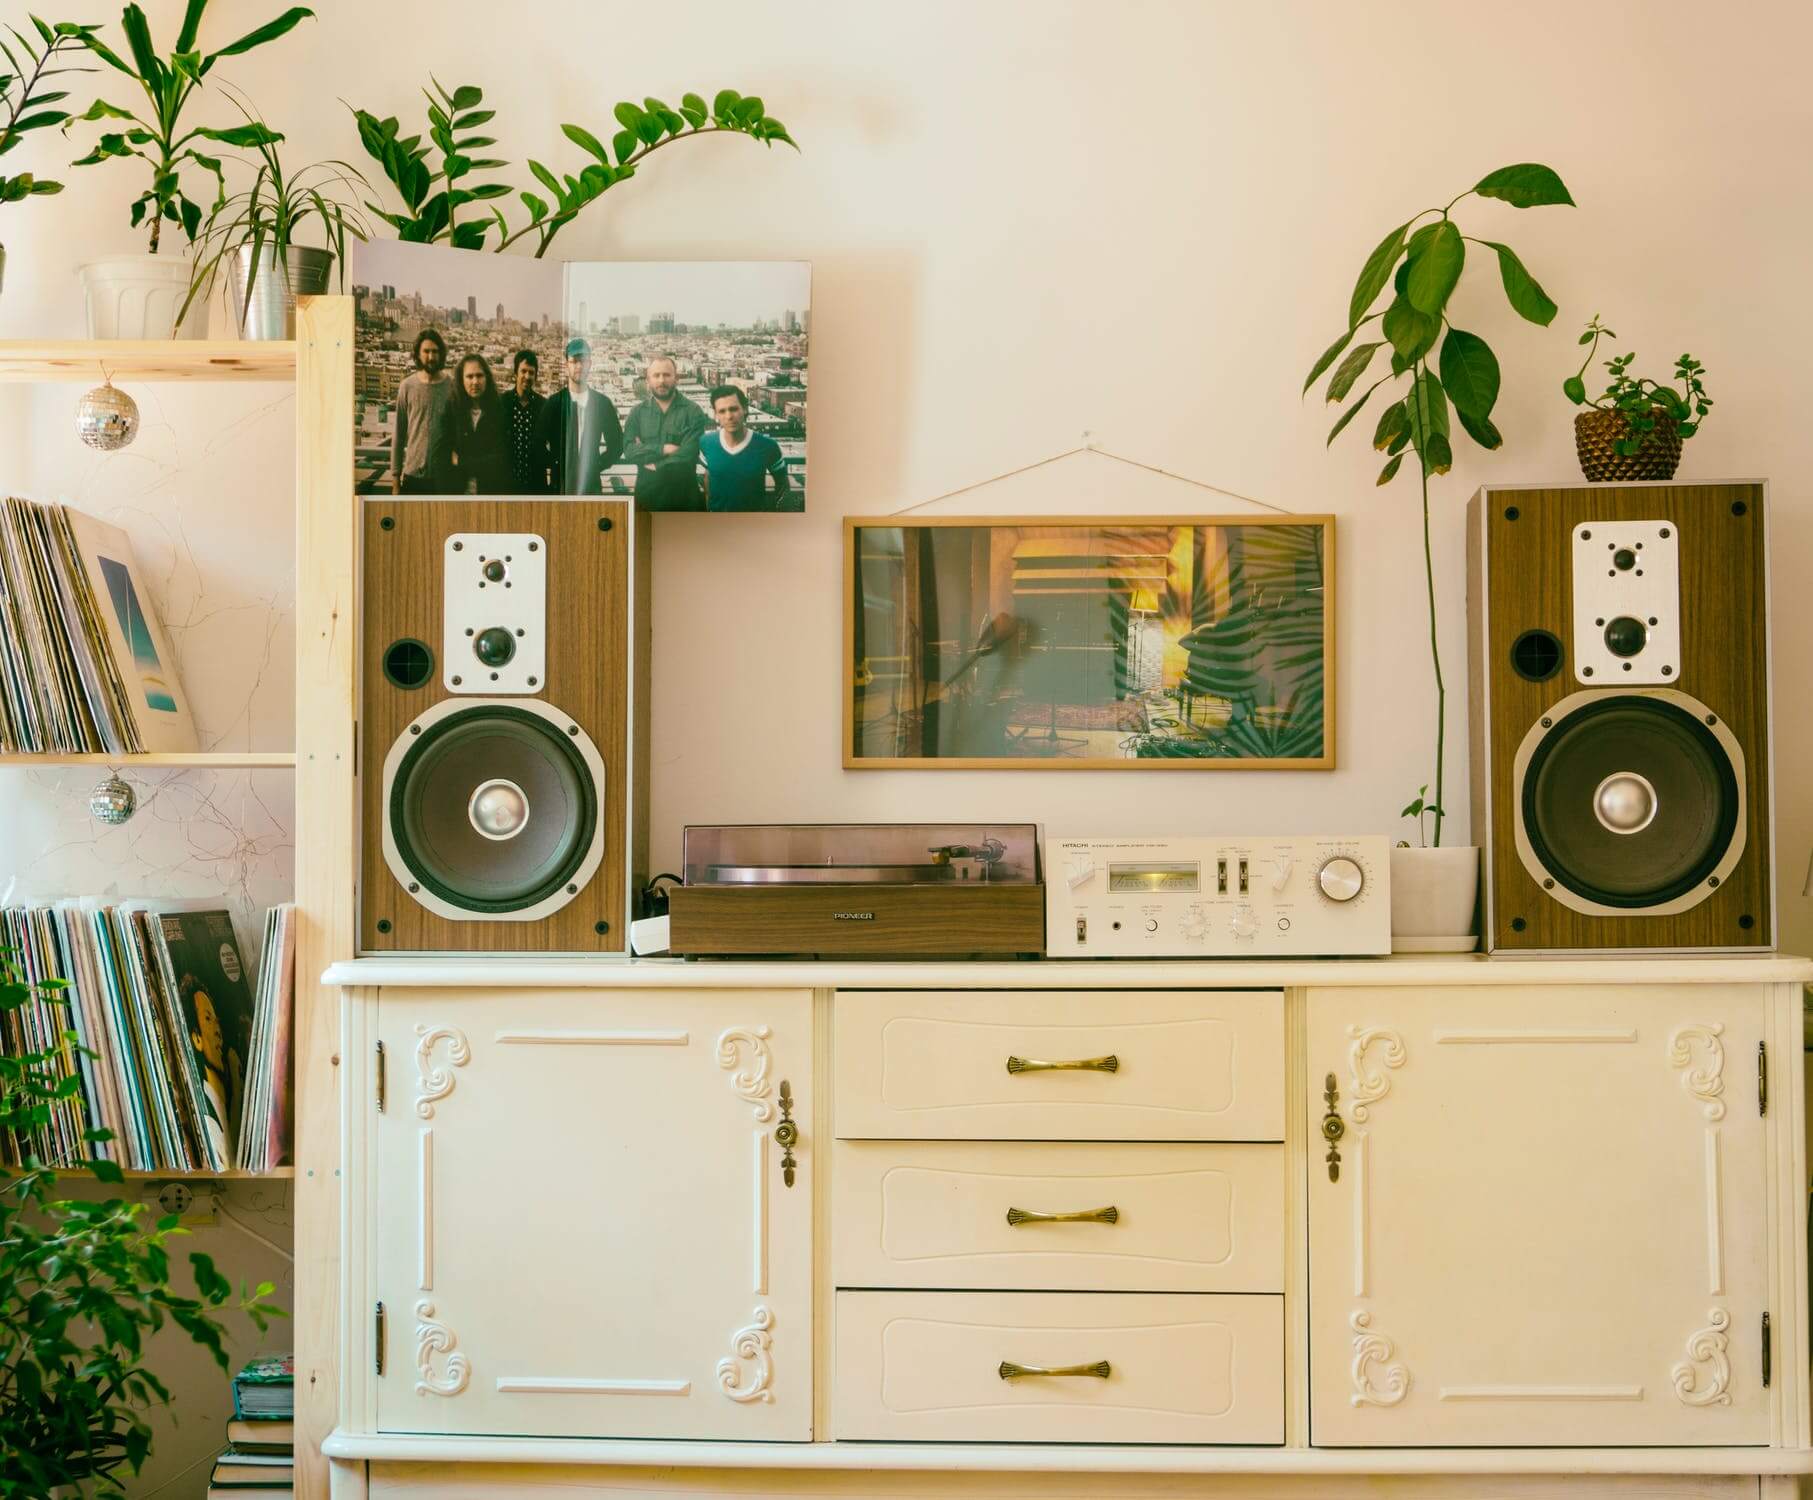 5 Hobbies That Can Earn You Money - Fixing Furniture